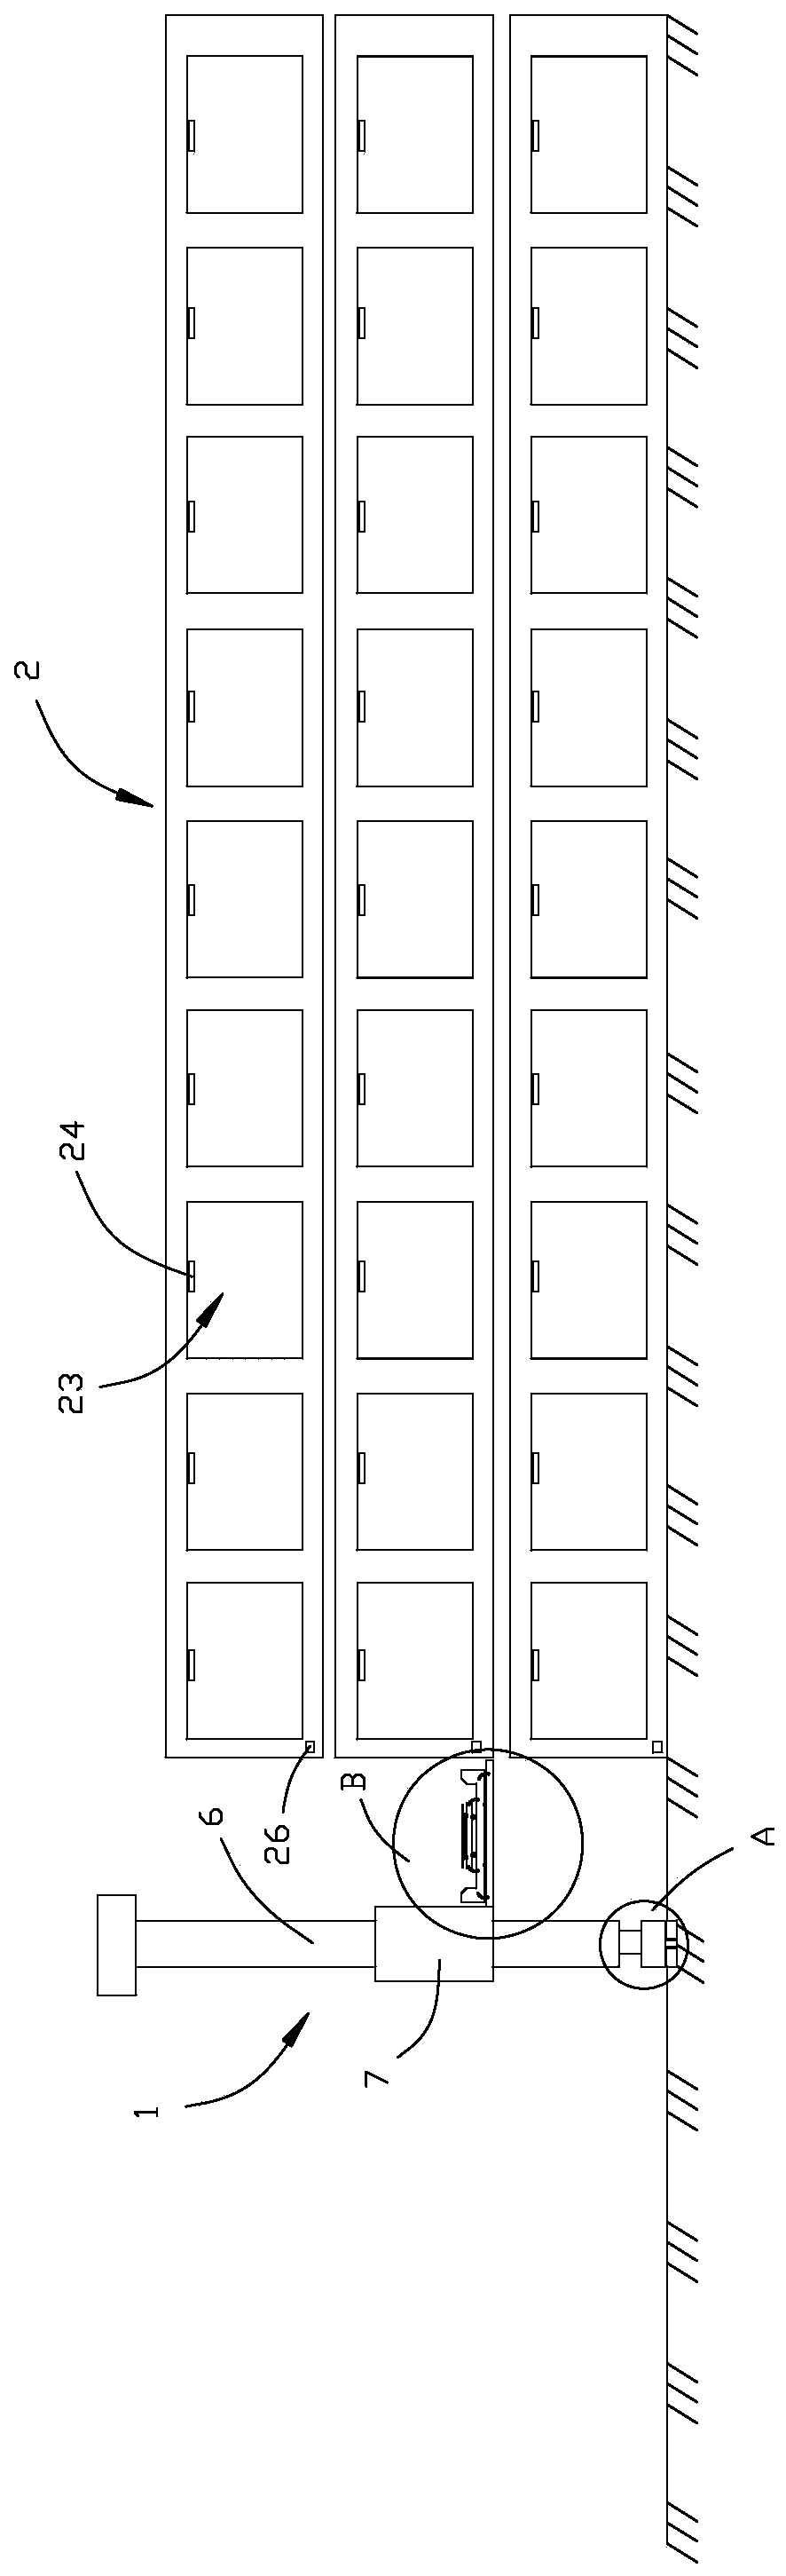 A parking storage method for a three-dimensional parking garage